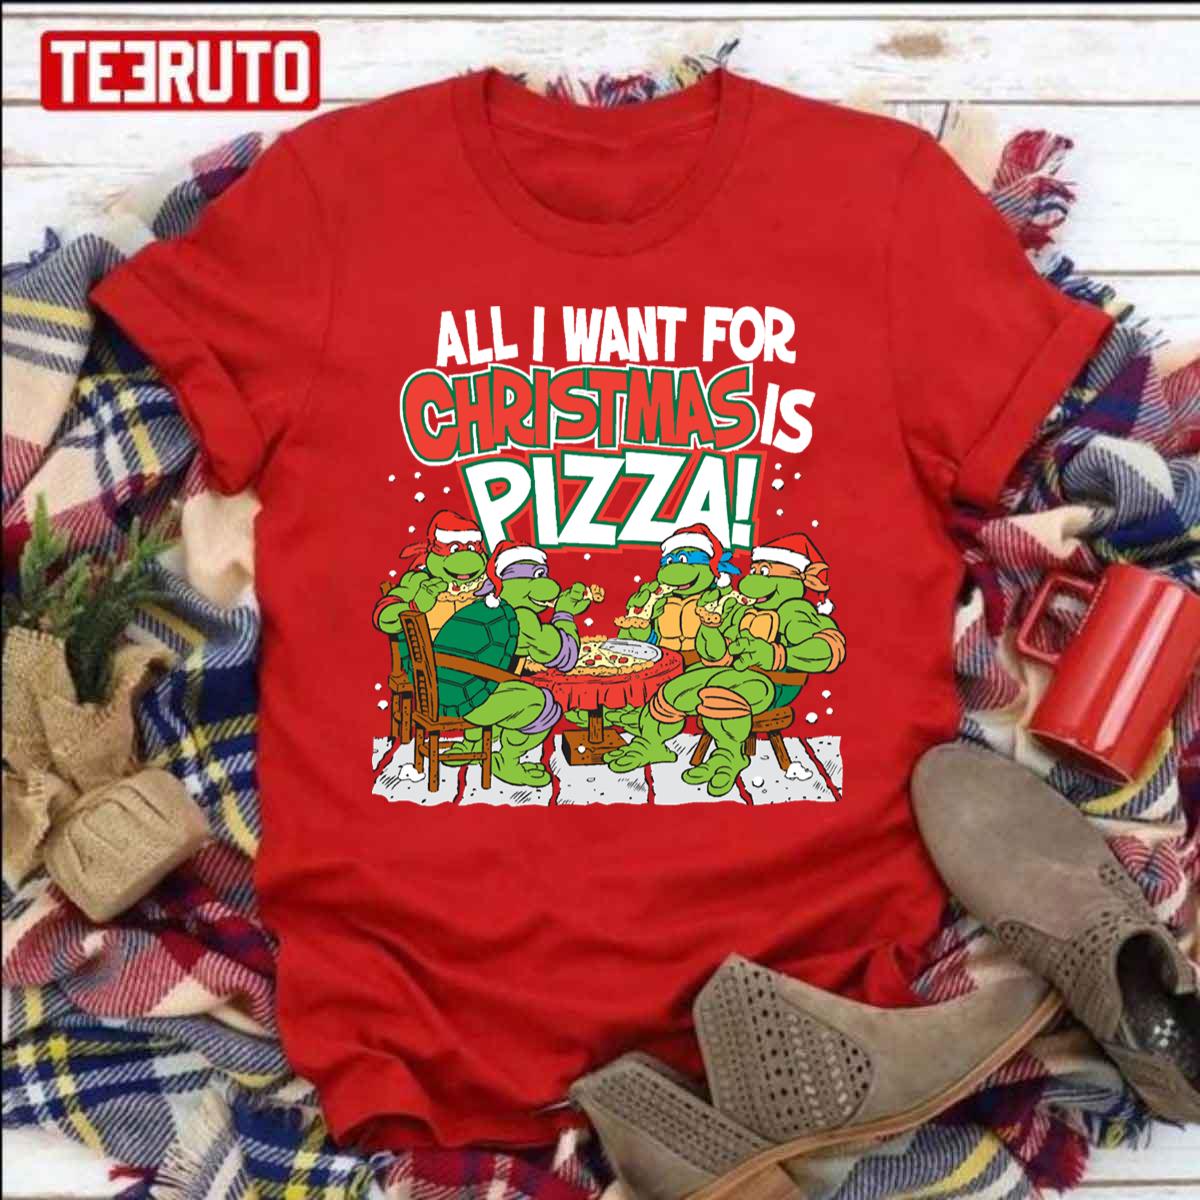 https://teeruto.com/wp-content/uploads/2022/09/teenage-mutant-ninja-turtles-pizza-for-christmas-unisex-sweatshirtpngnw.jpg